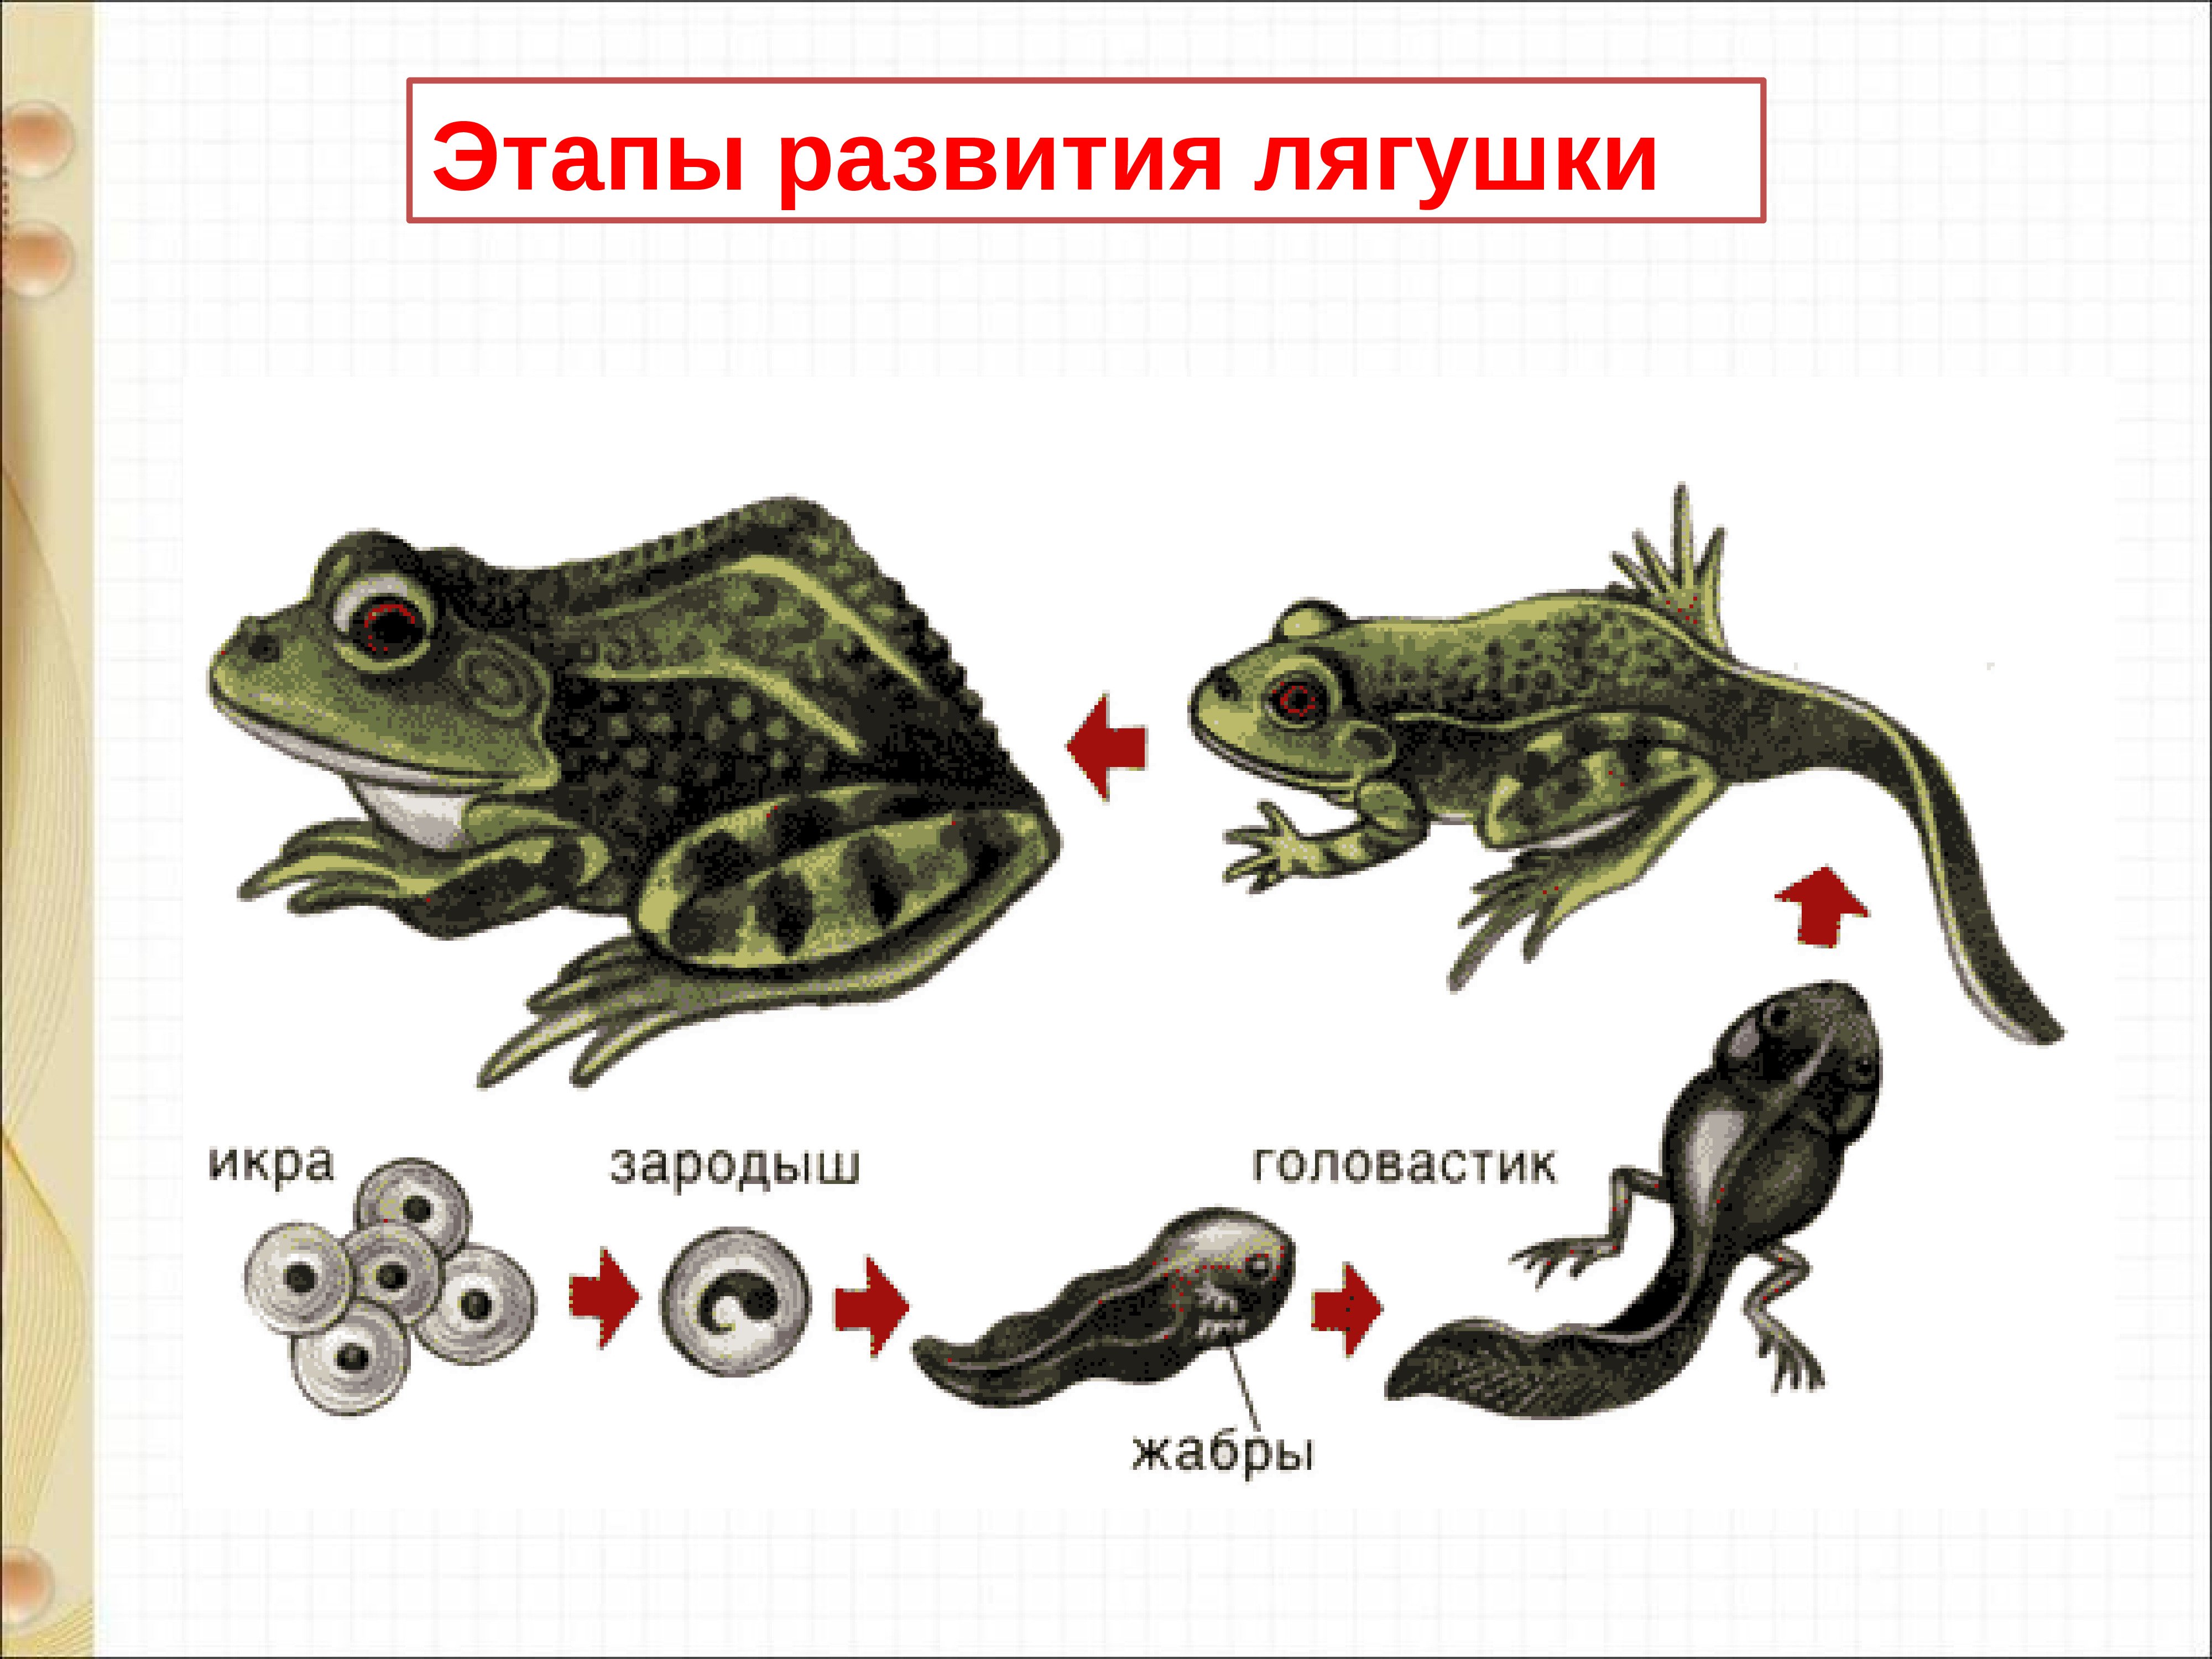 Какой тип развития характерен для лягушки. Стадии развития головастика лягушки. Головастик личиночная стадия развития лягушки. Эволюция лягушки из головастика. Схема развития головастика.